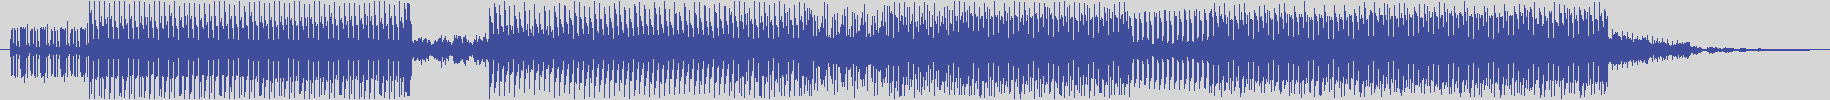 nf_boyz_records [NFY044] The Unsure Ginger - Abolished Vivid [Original Mix] audio wave form